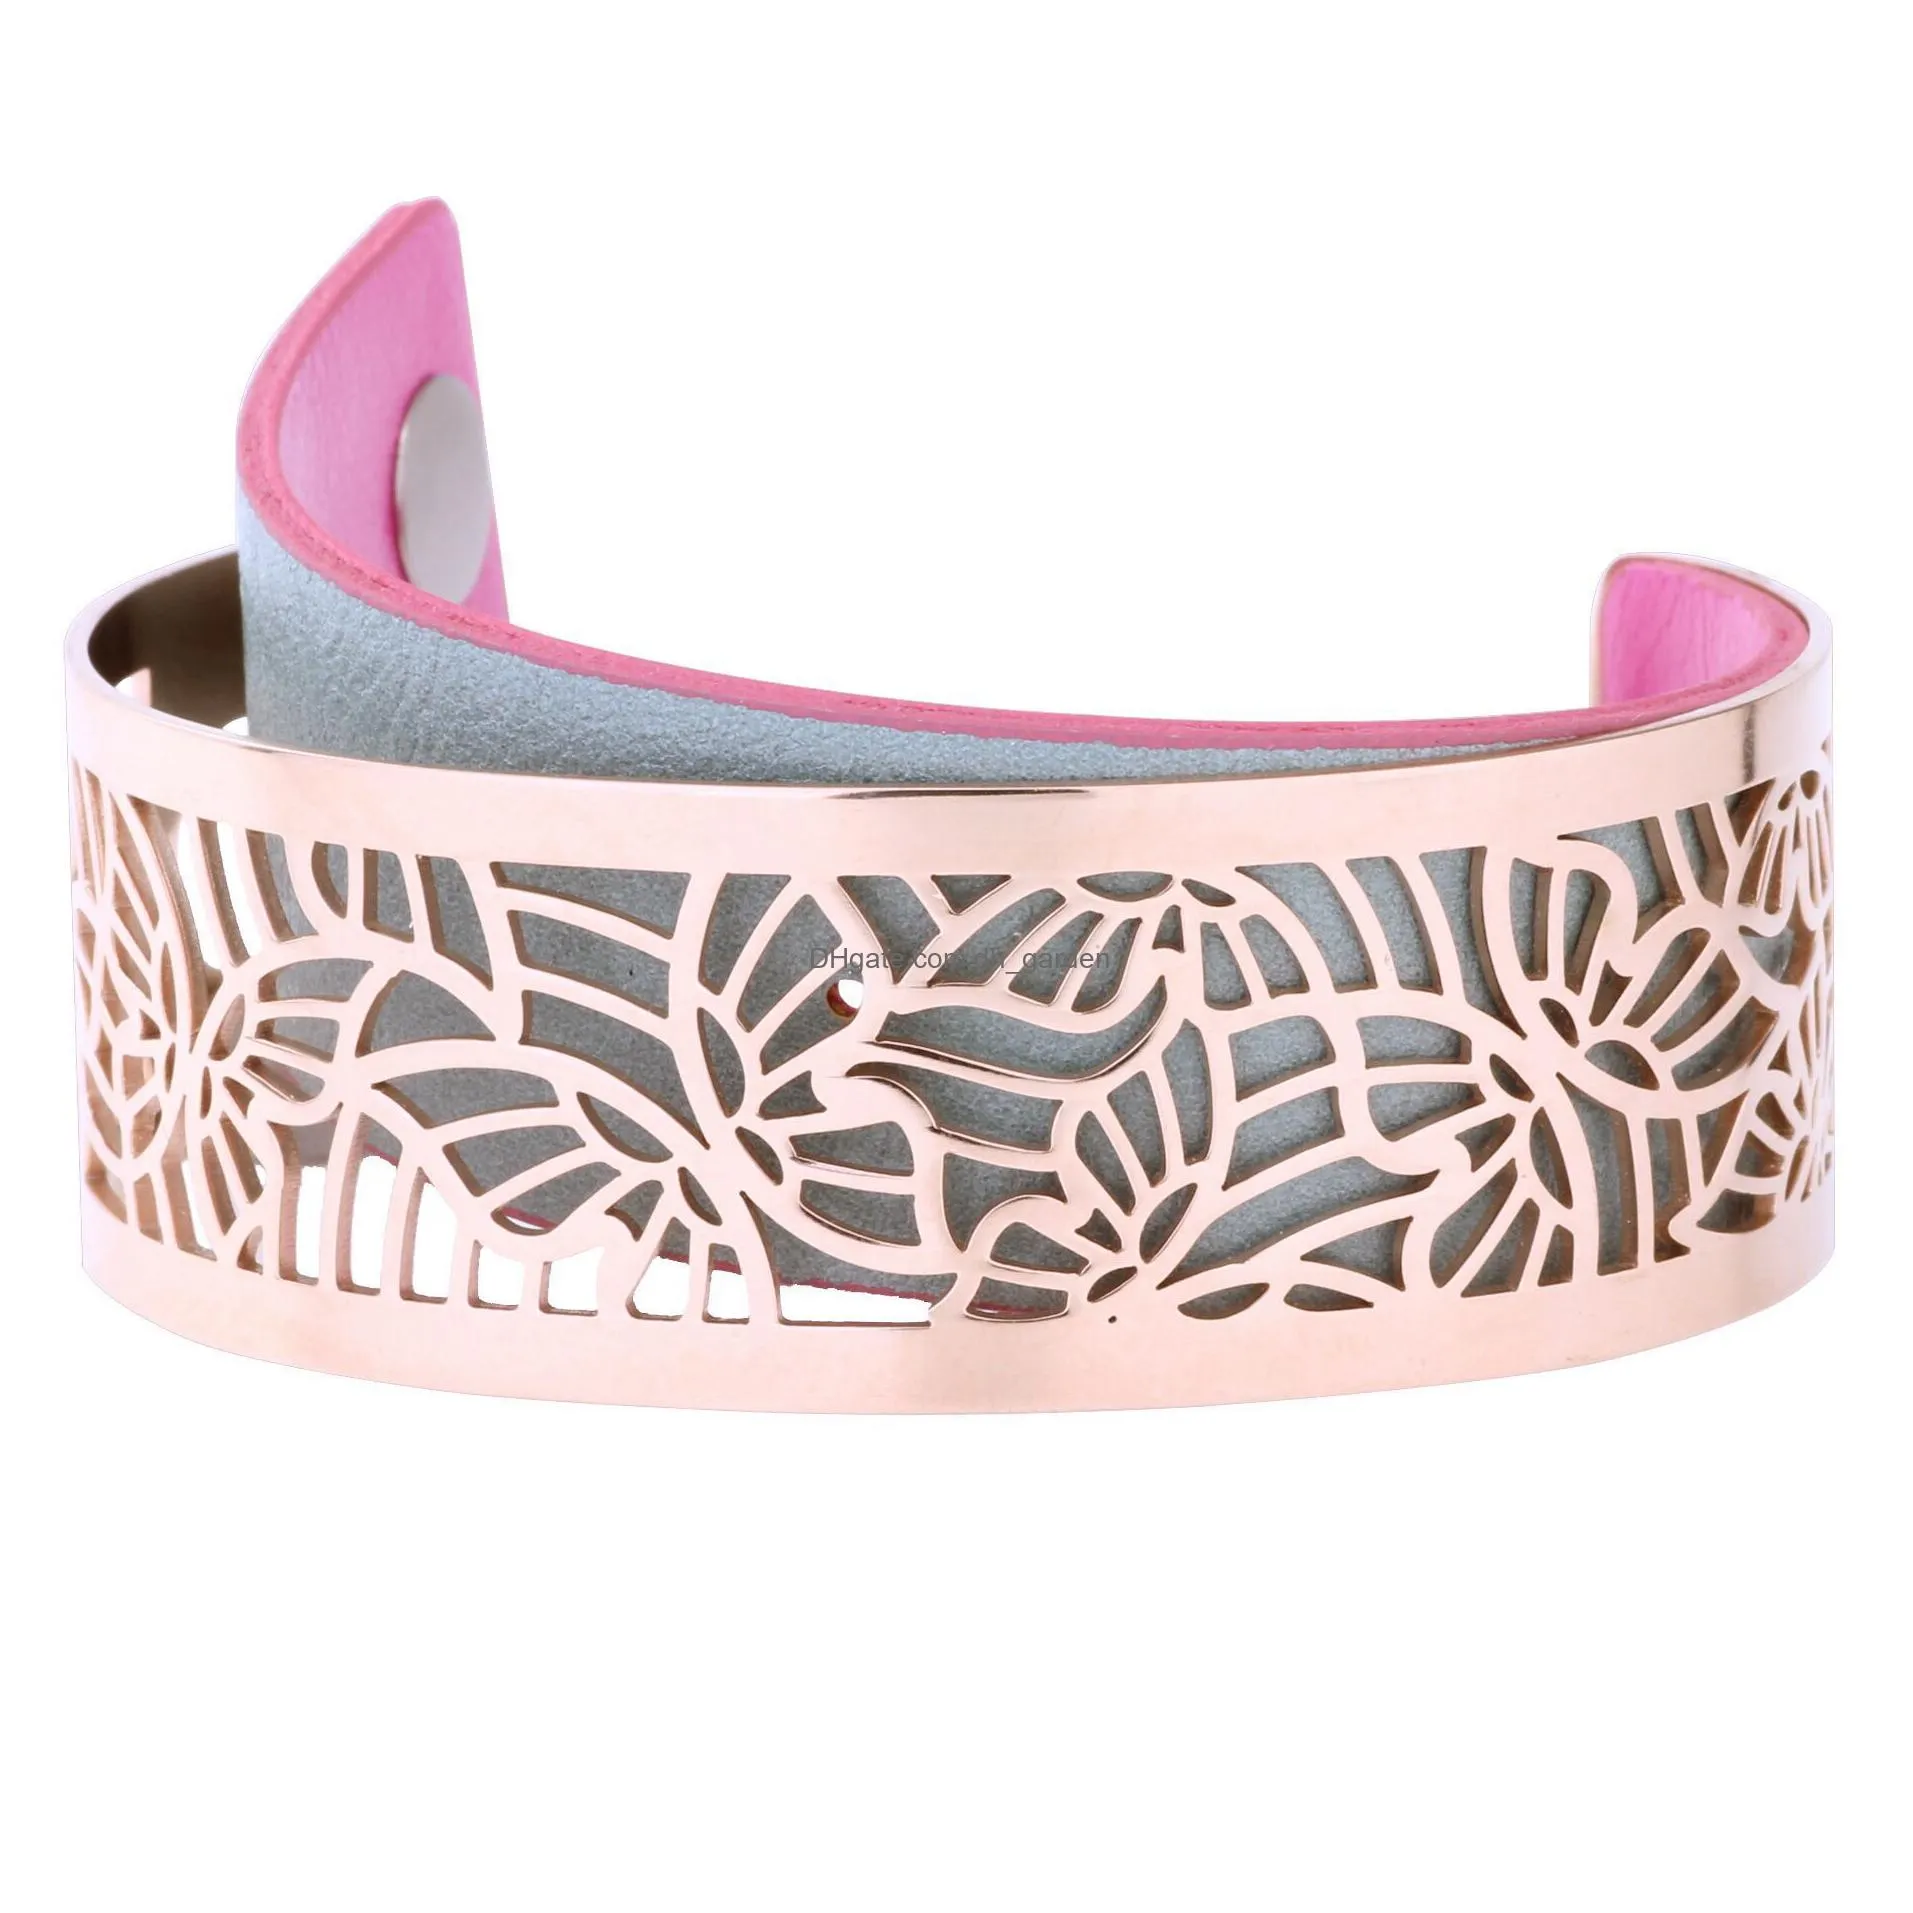 cremo luxury stainless steel butterfly cuff bangles bracelets for women manchette femme interchangeable leather arm bracelet